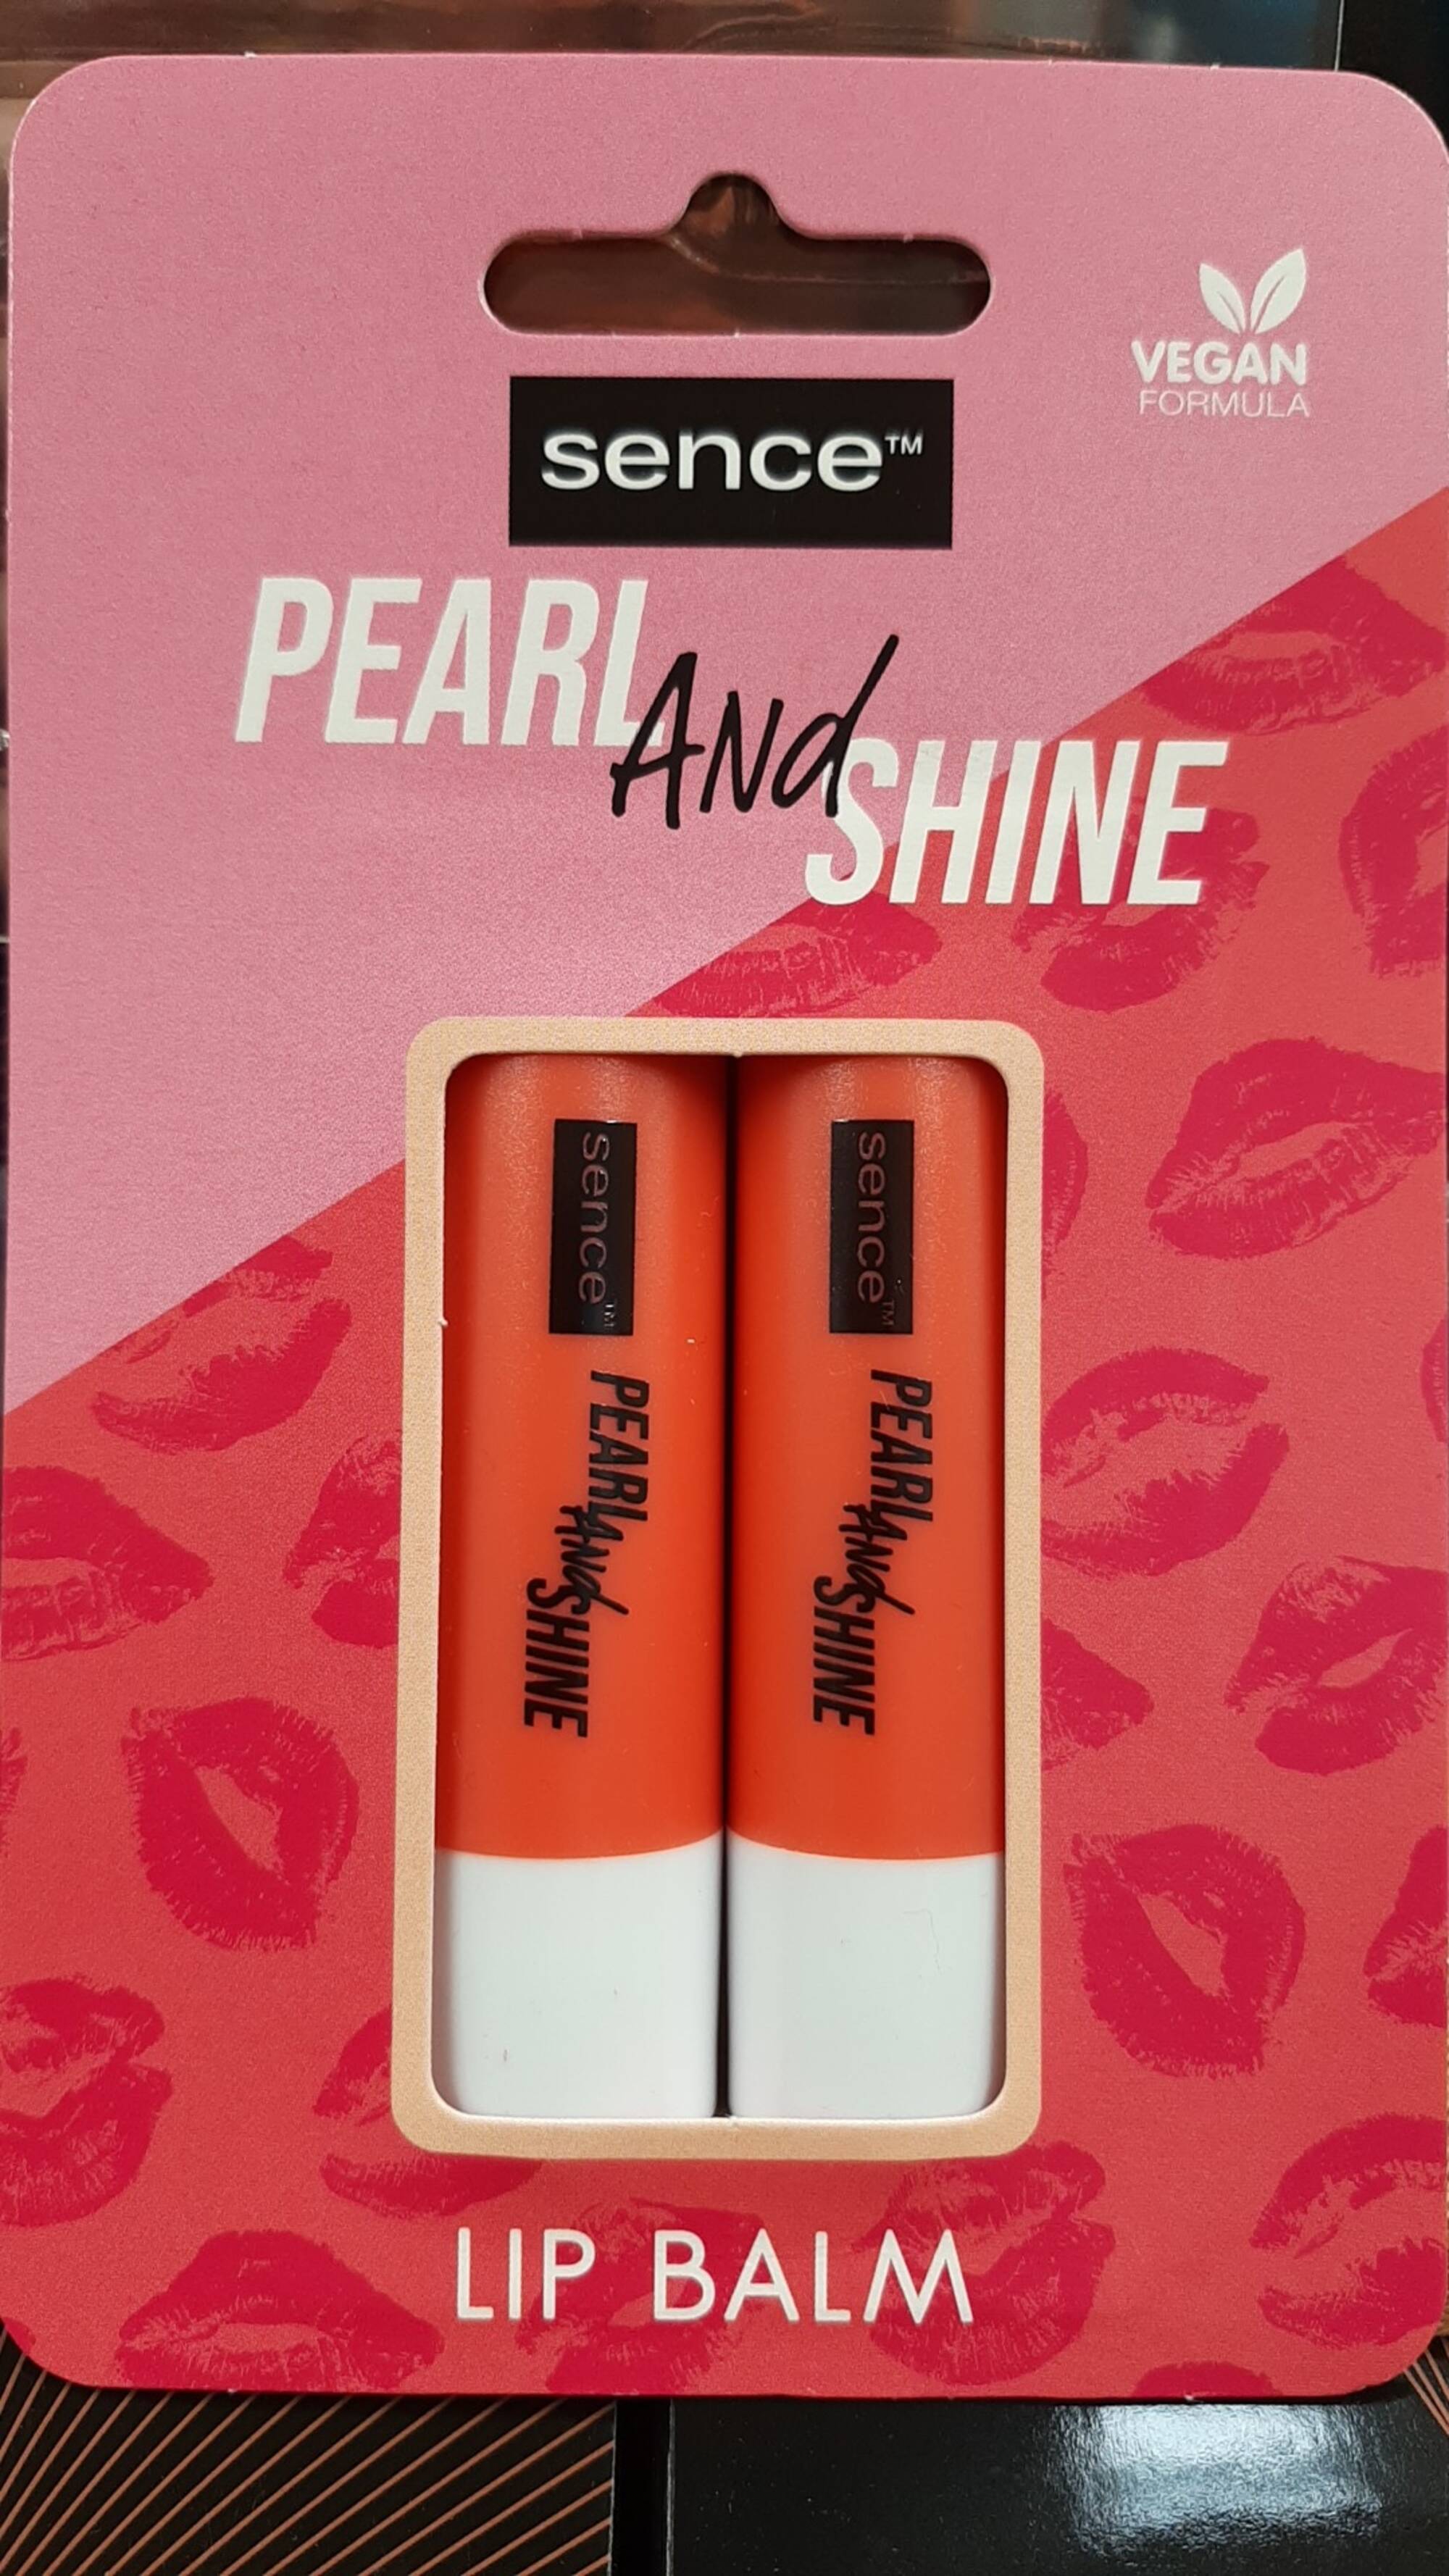 SENCE - Pearl and shine - Lip balm